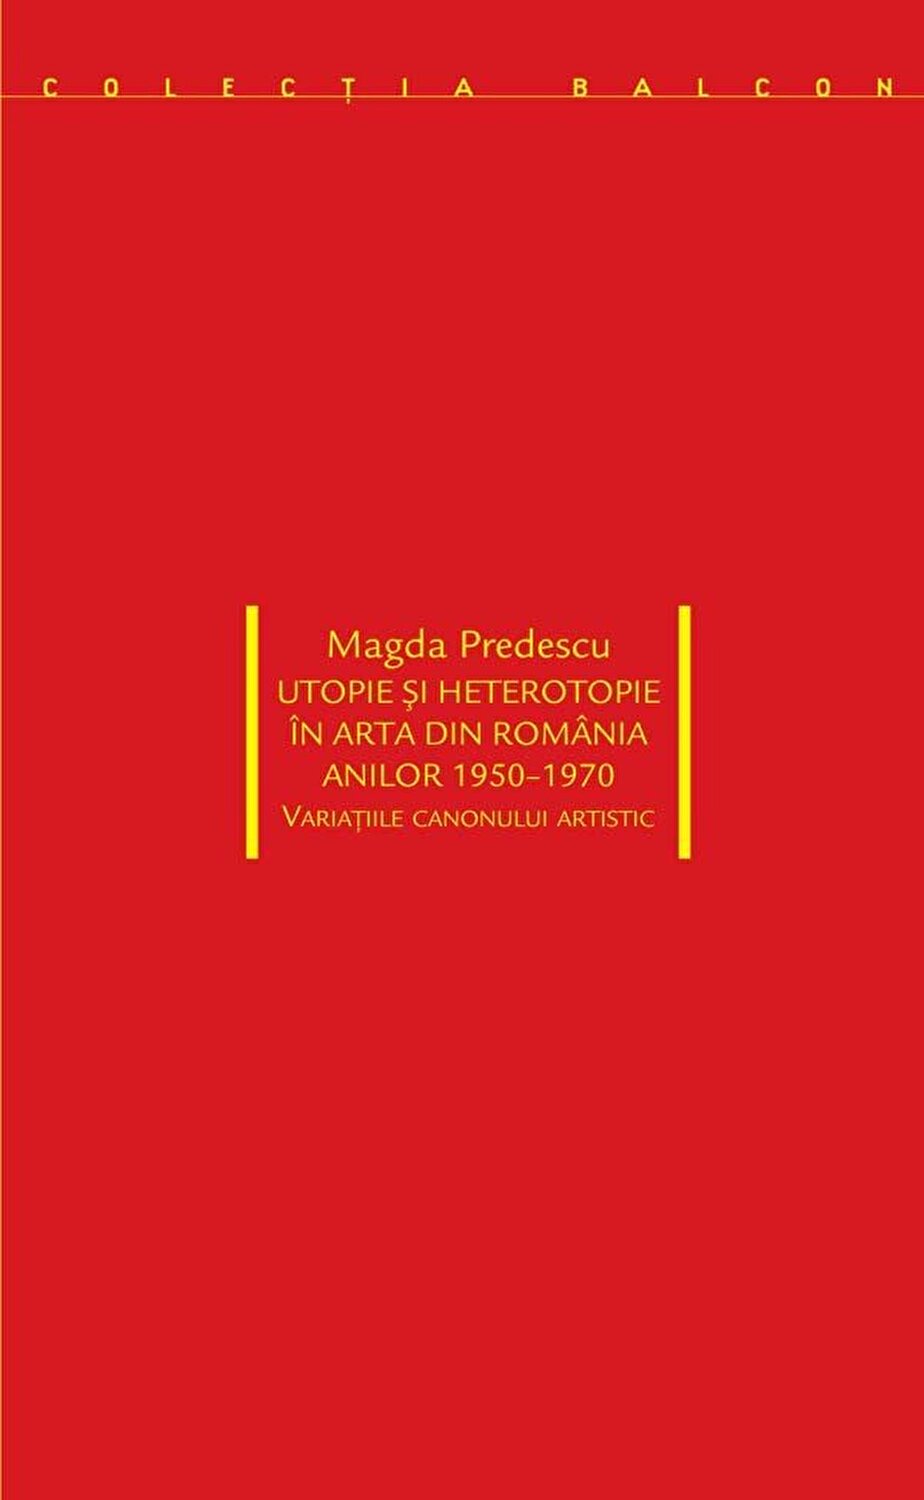 Utopie si heterotopie in arta din Romania anilor 1950-1970 | Magda Predescu 1950-1970 imagine 2022